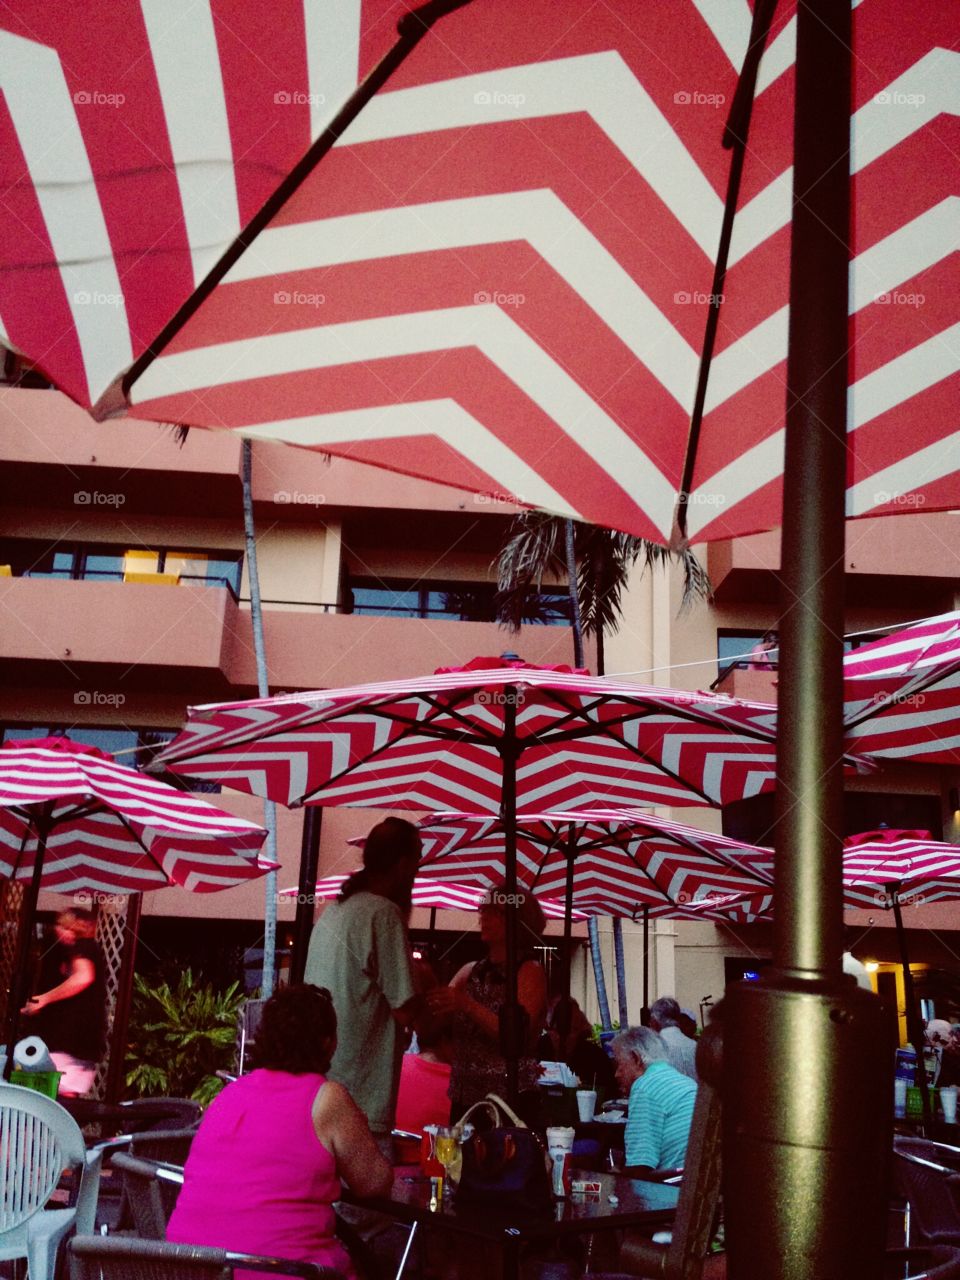 Umbrella Bar at vacation spot!